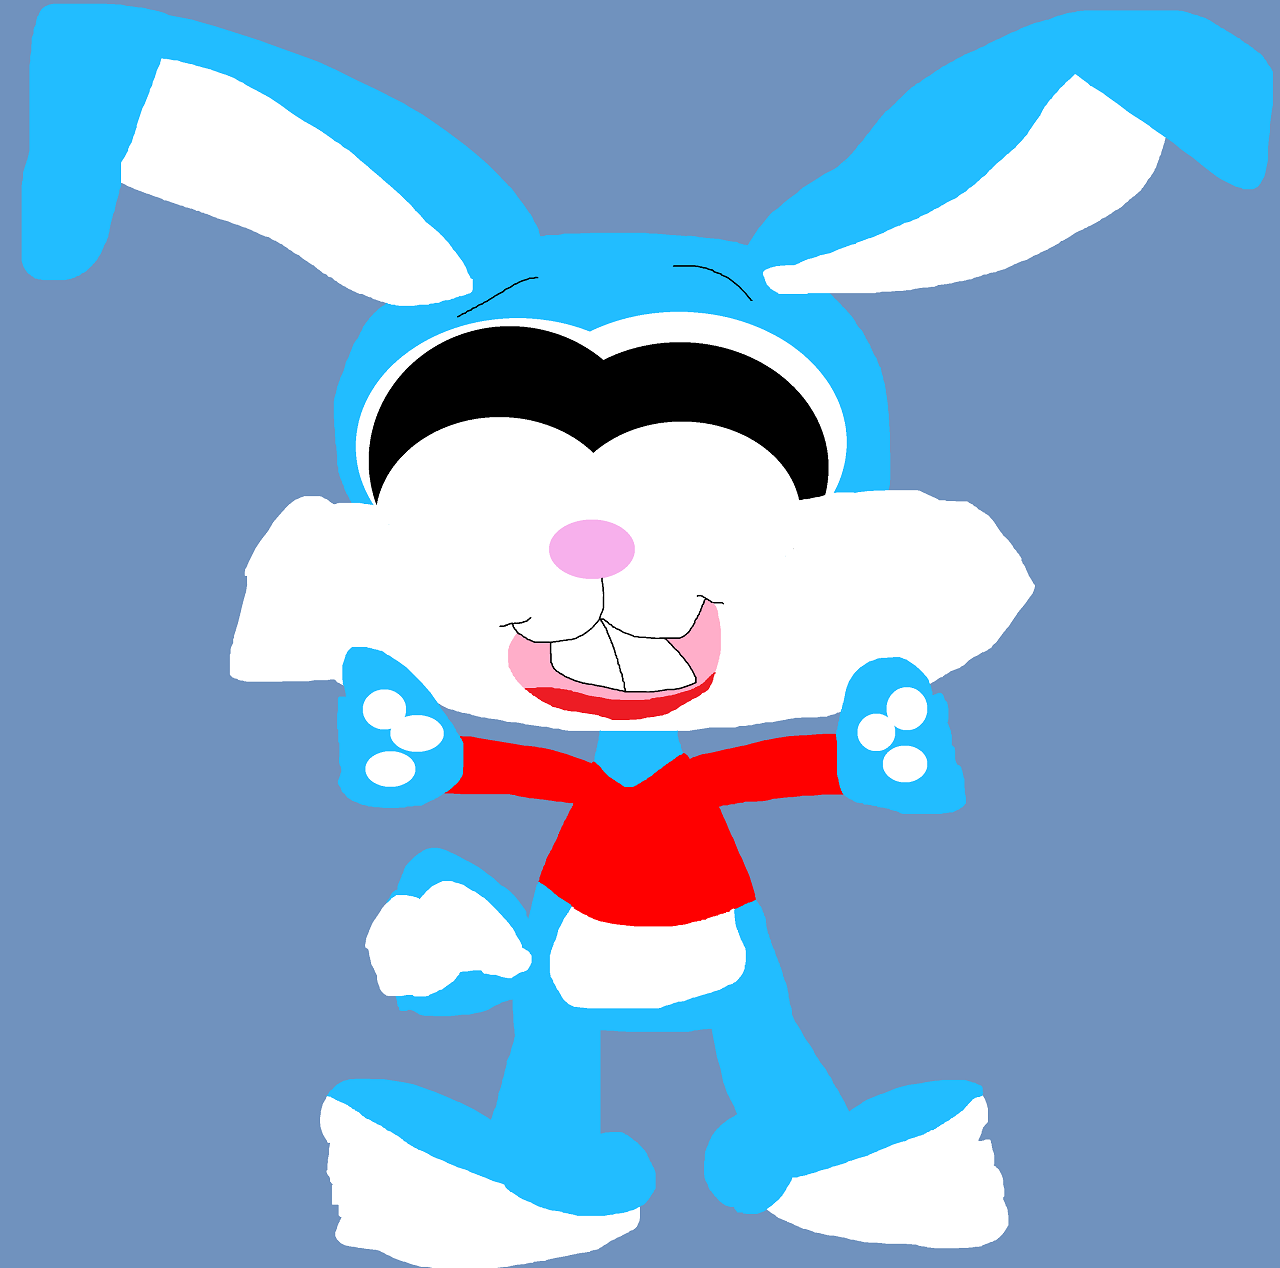 Buster Bunny by Falconlobo